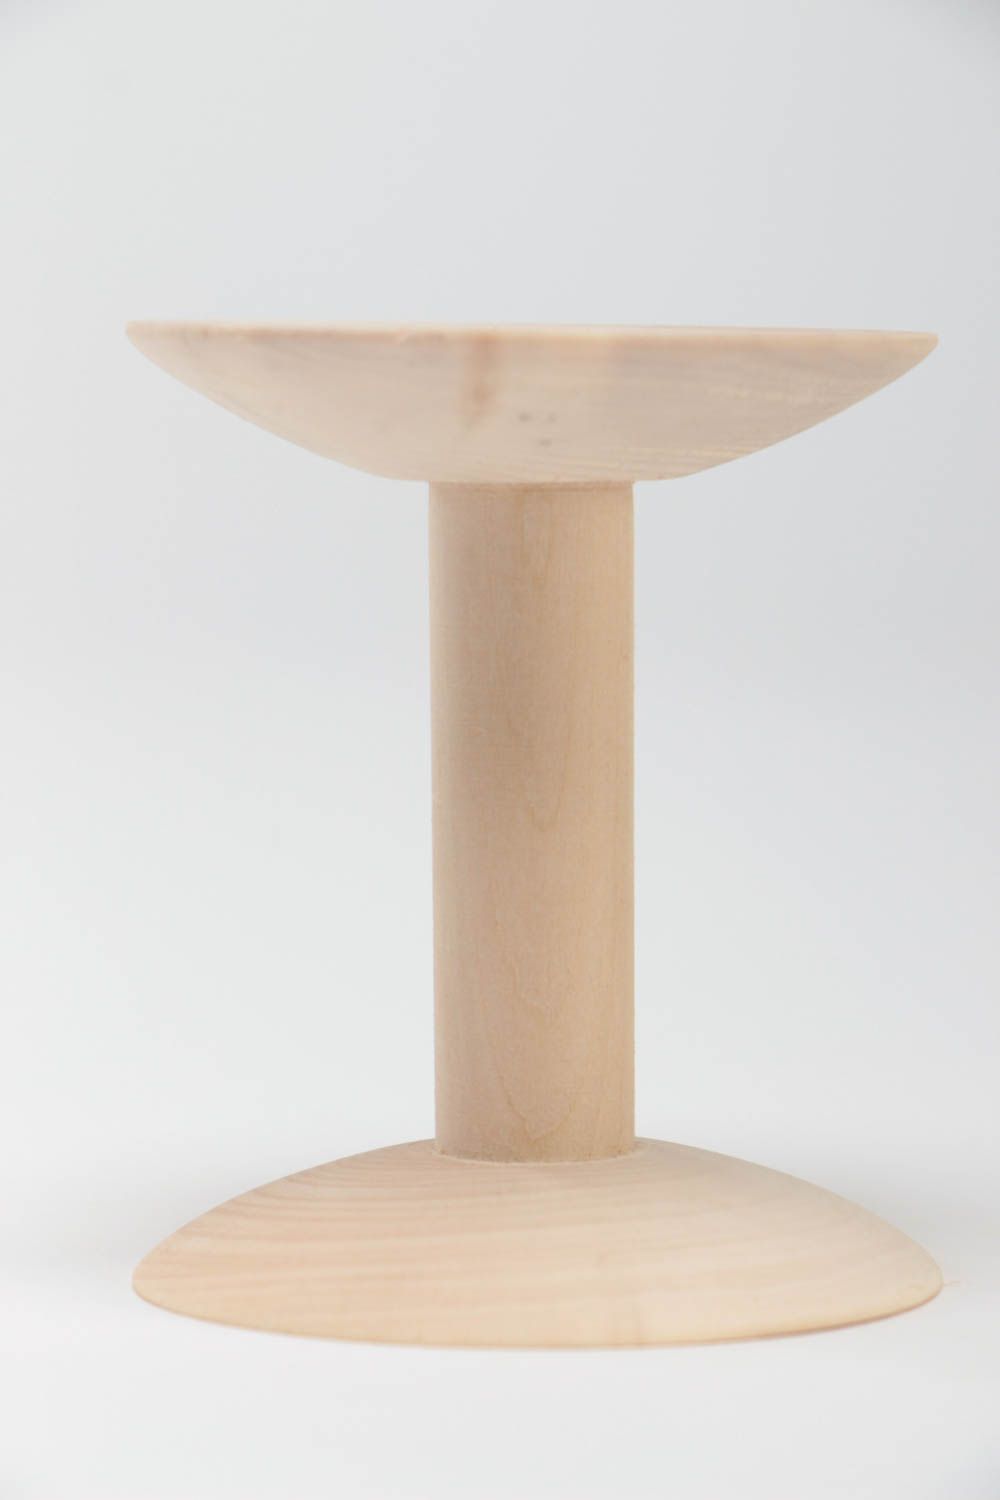 Handmade Holz Spule für Spitzen Rohling Kiefernholz zum Bemalen oder Decoupage foto 4